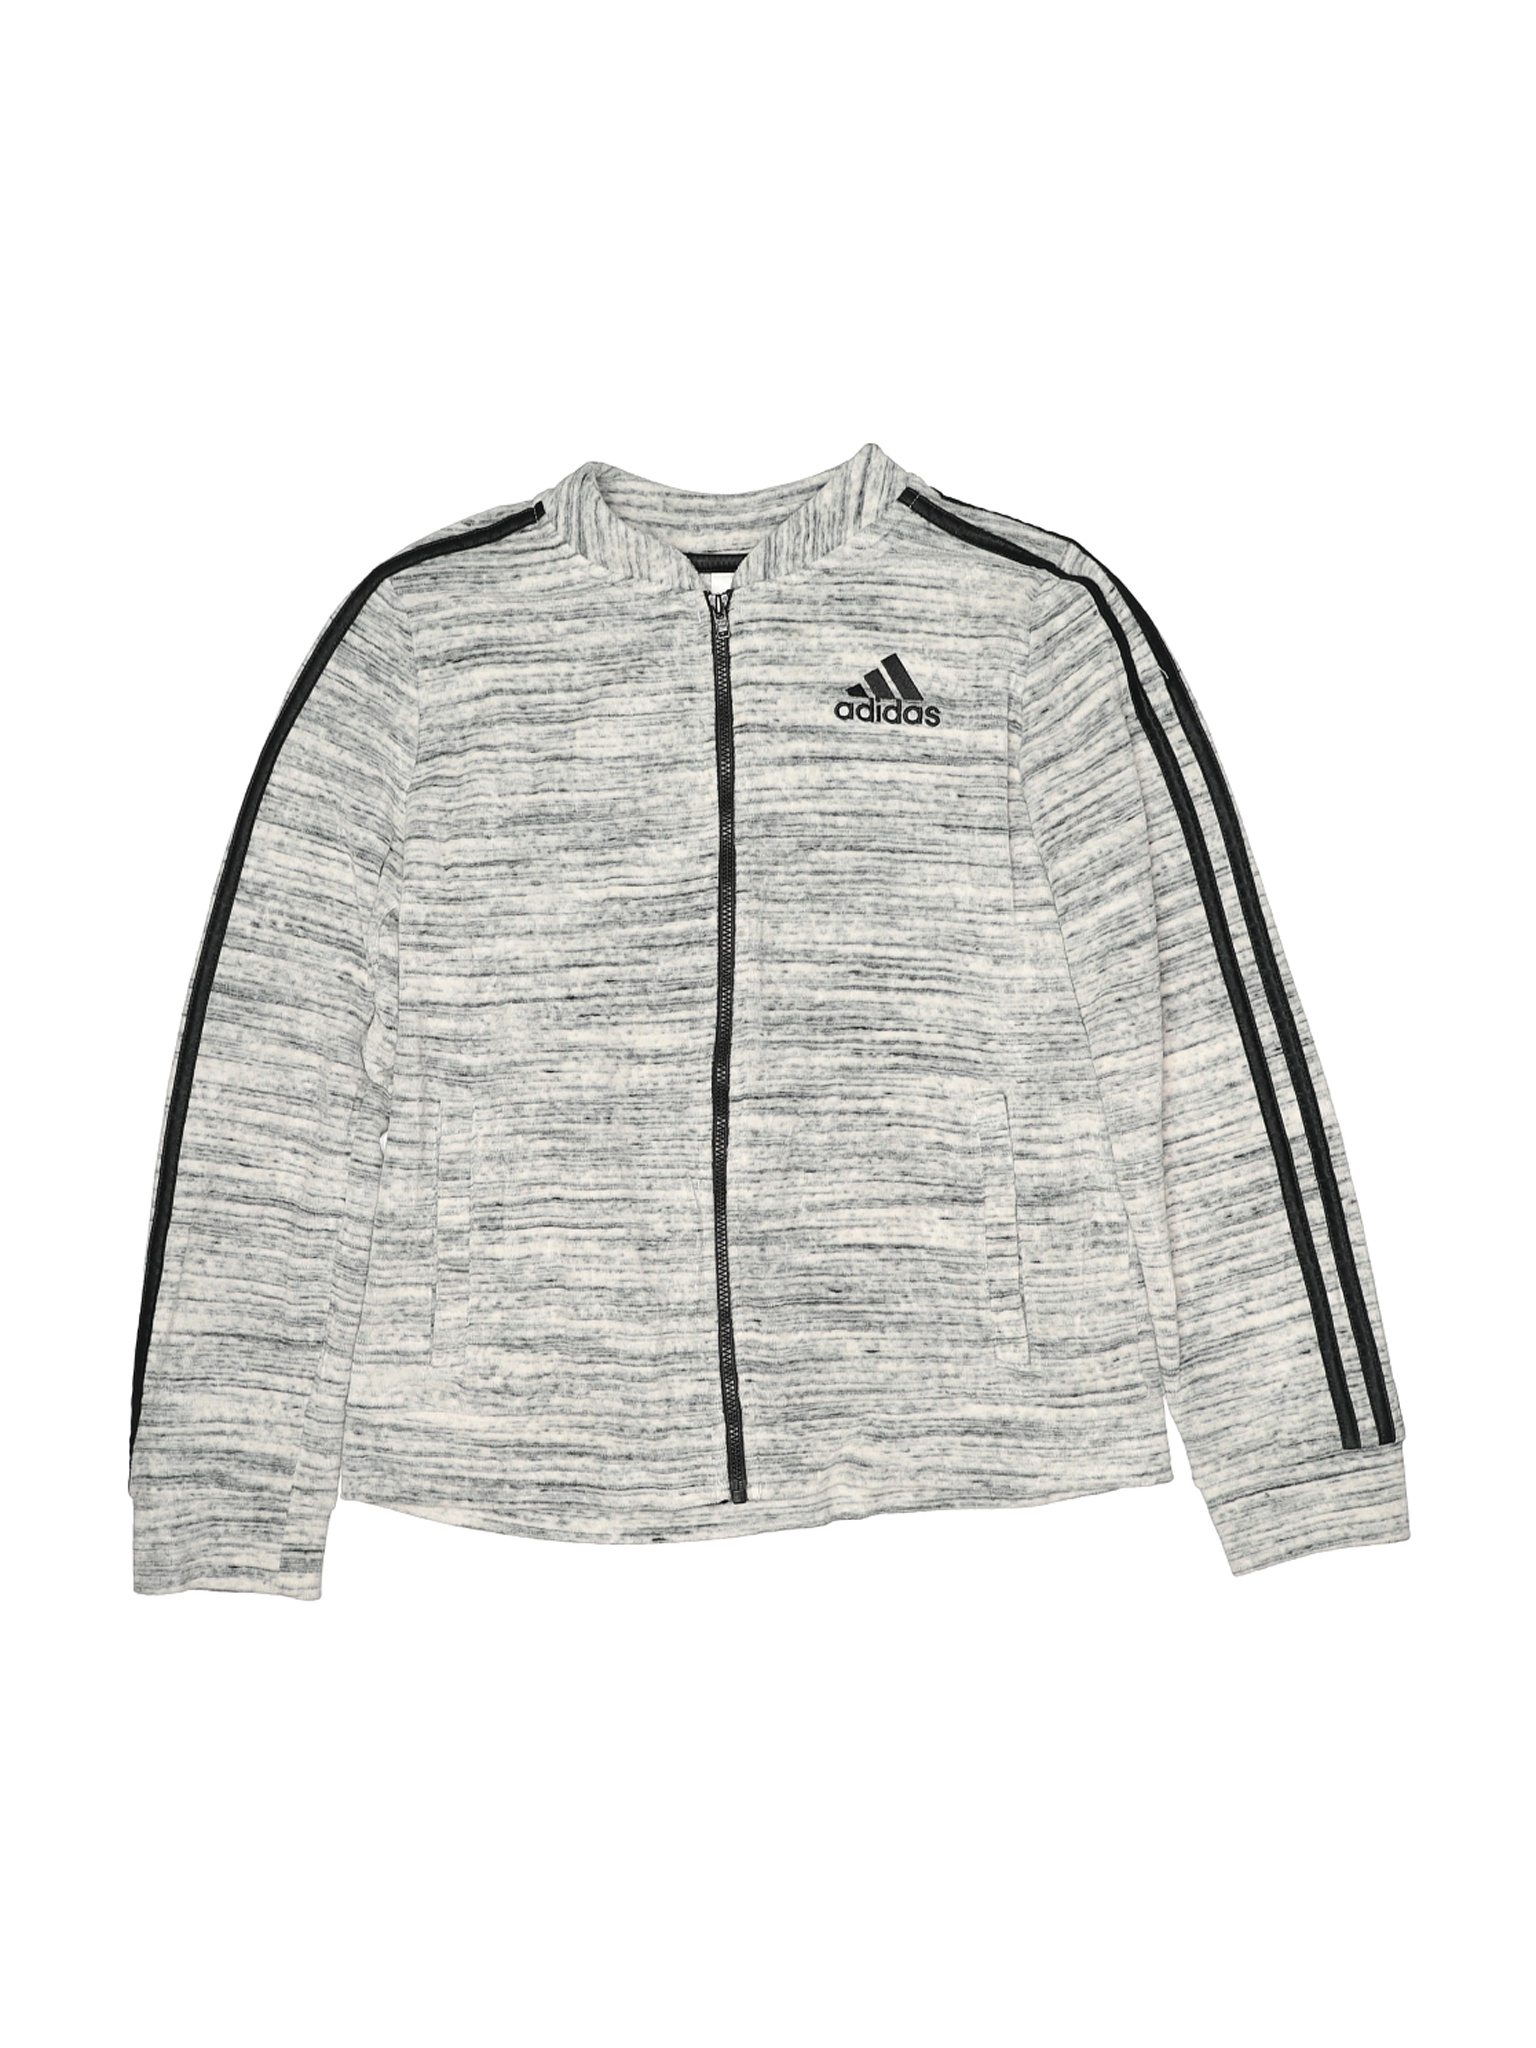 Adidas Girls Gray Track Jacket 14 | eBay